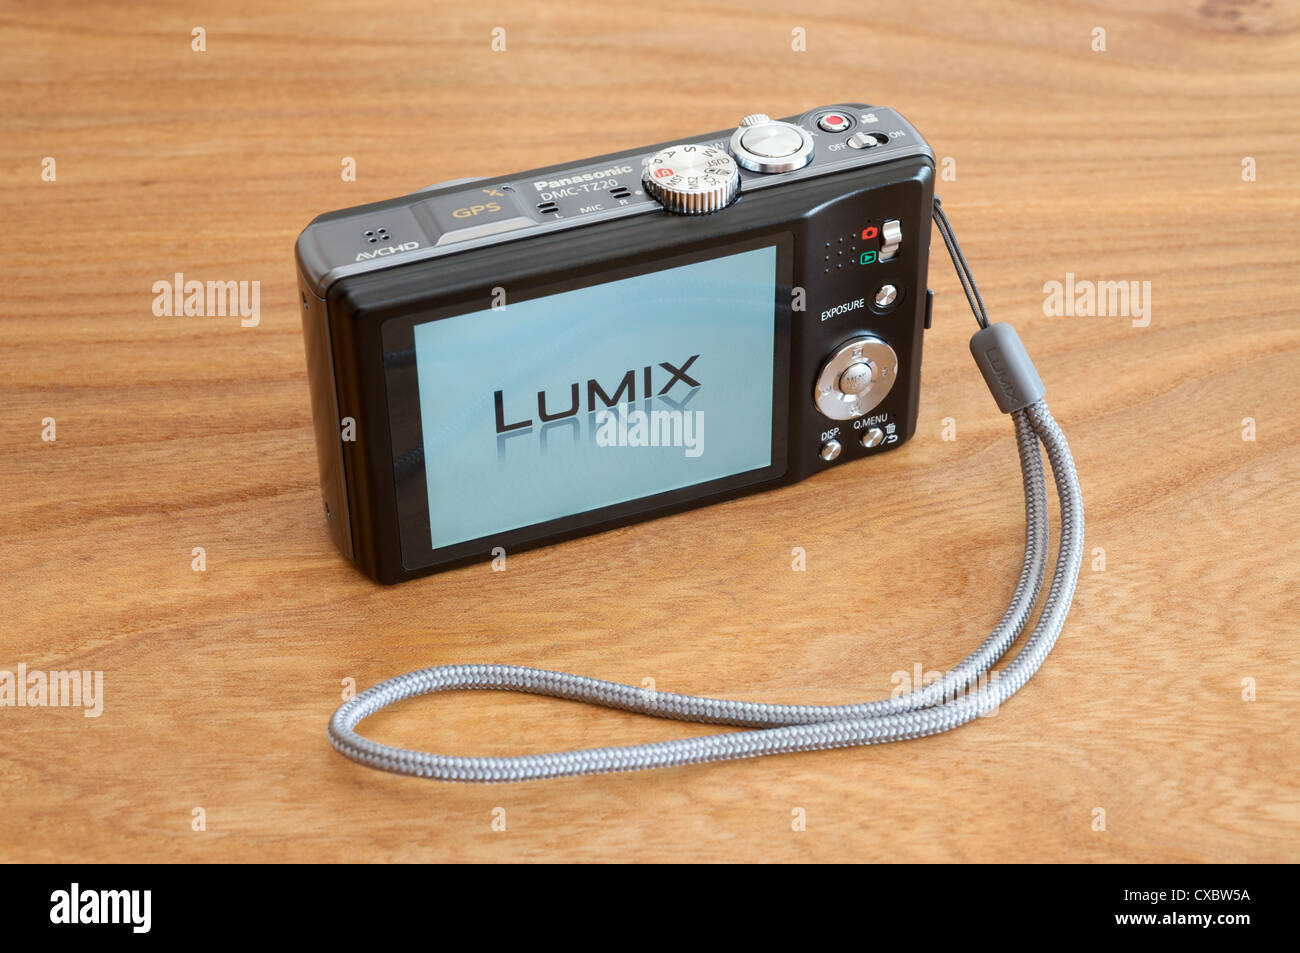 Panasonic Lumix TZ20 digital camera Stock Photo